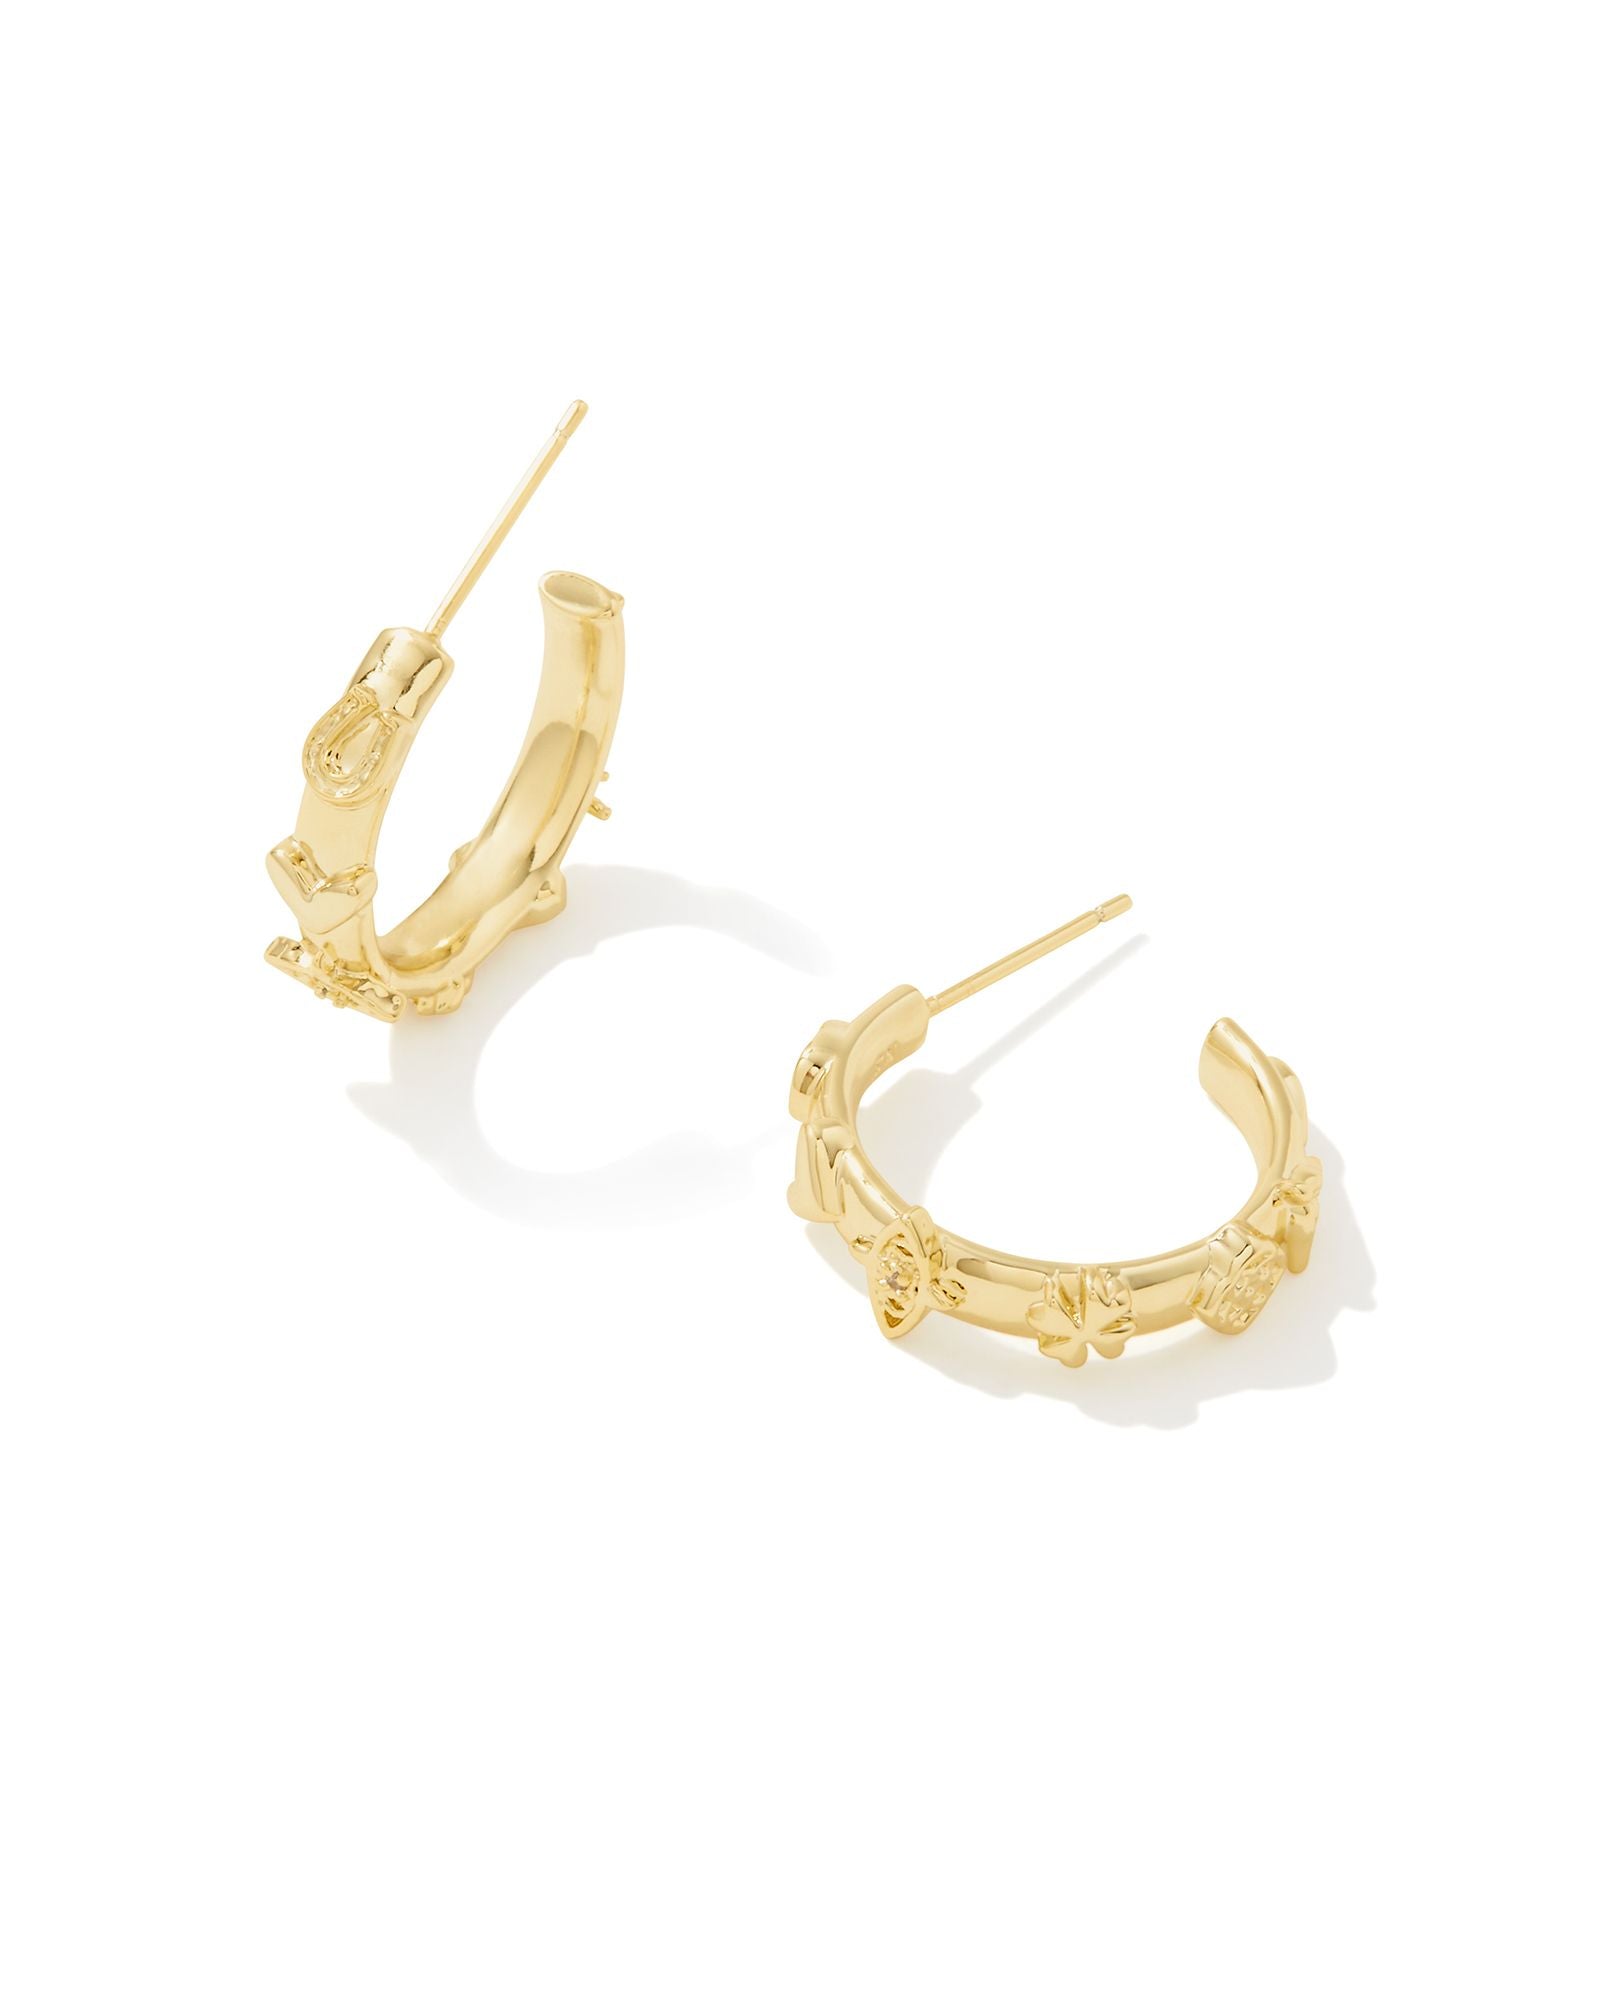 Beatrix Gold Small Hoop Earrings